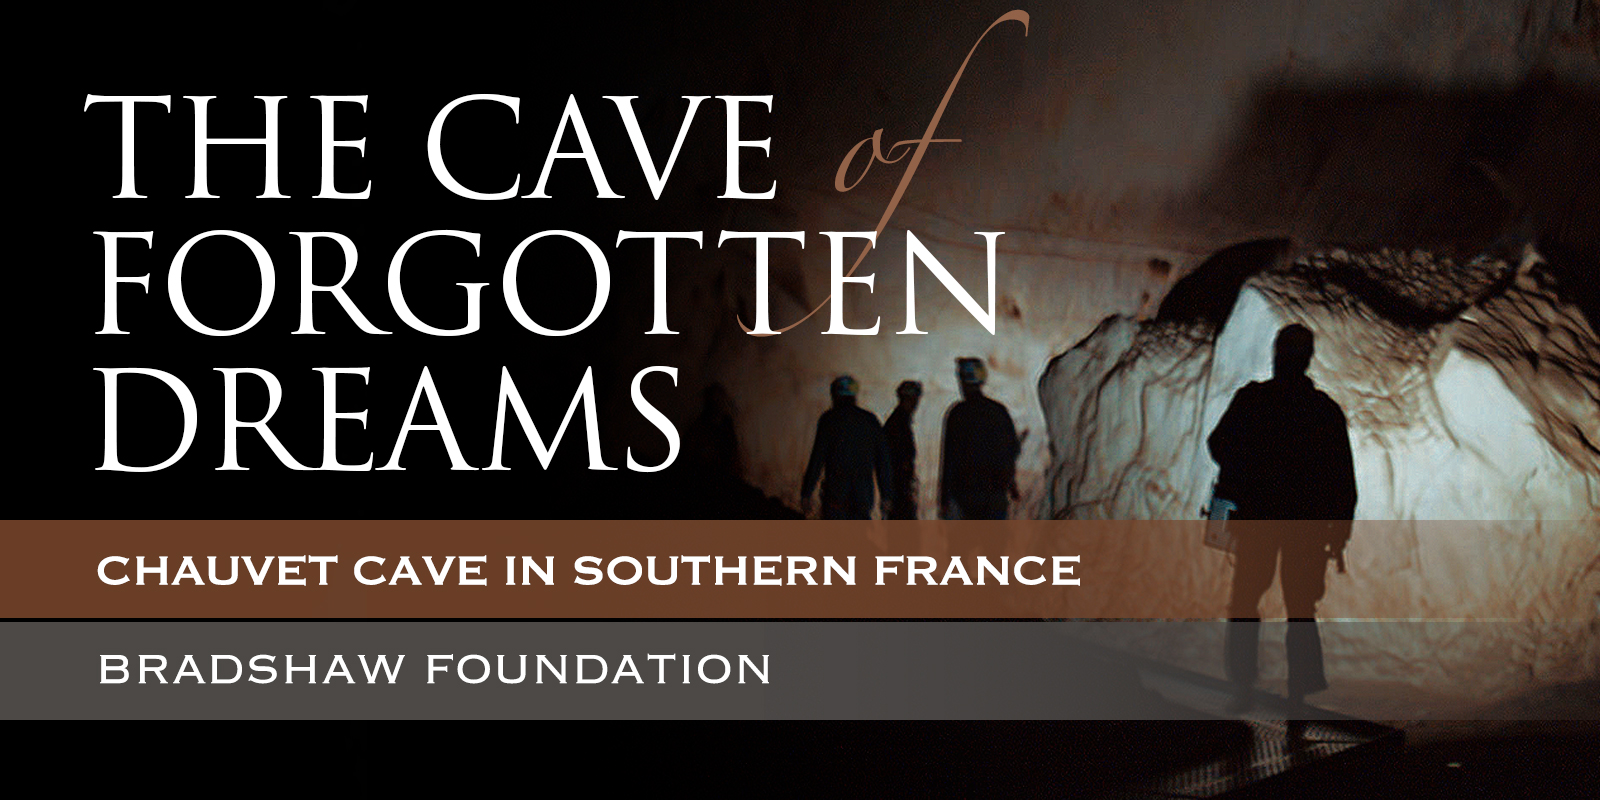 Chauvet Cave Art Paintings France Archaeology